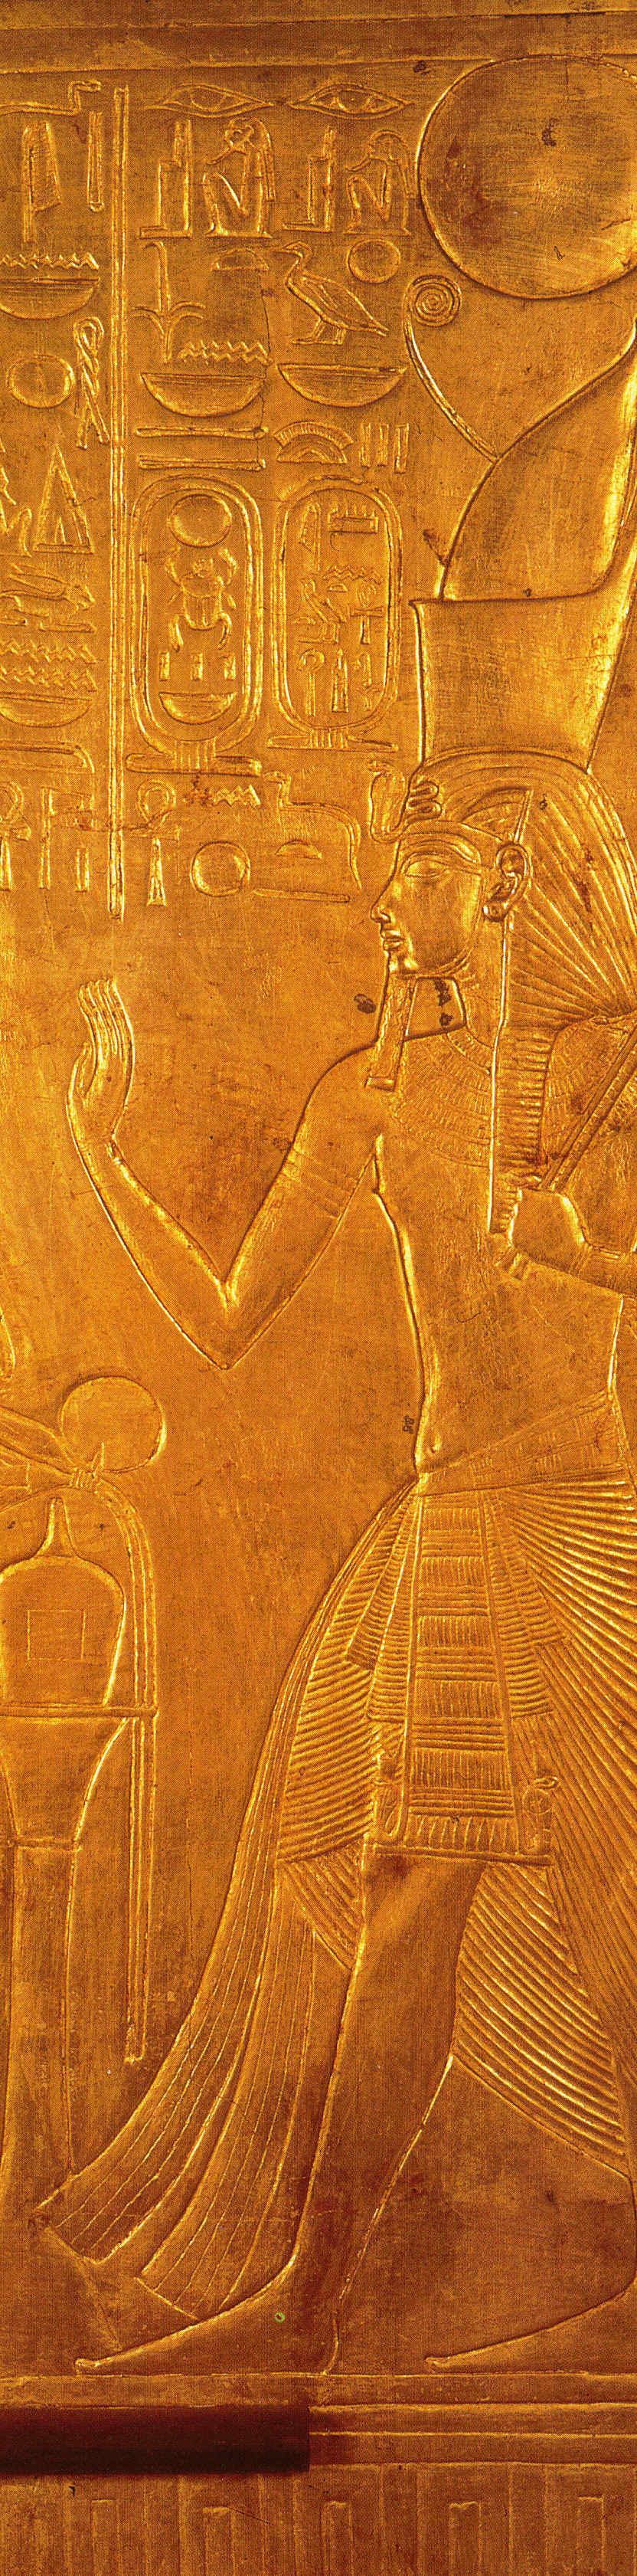 Tutankhamon e